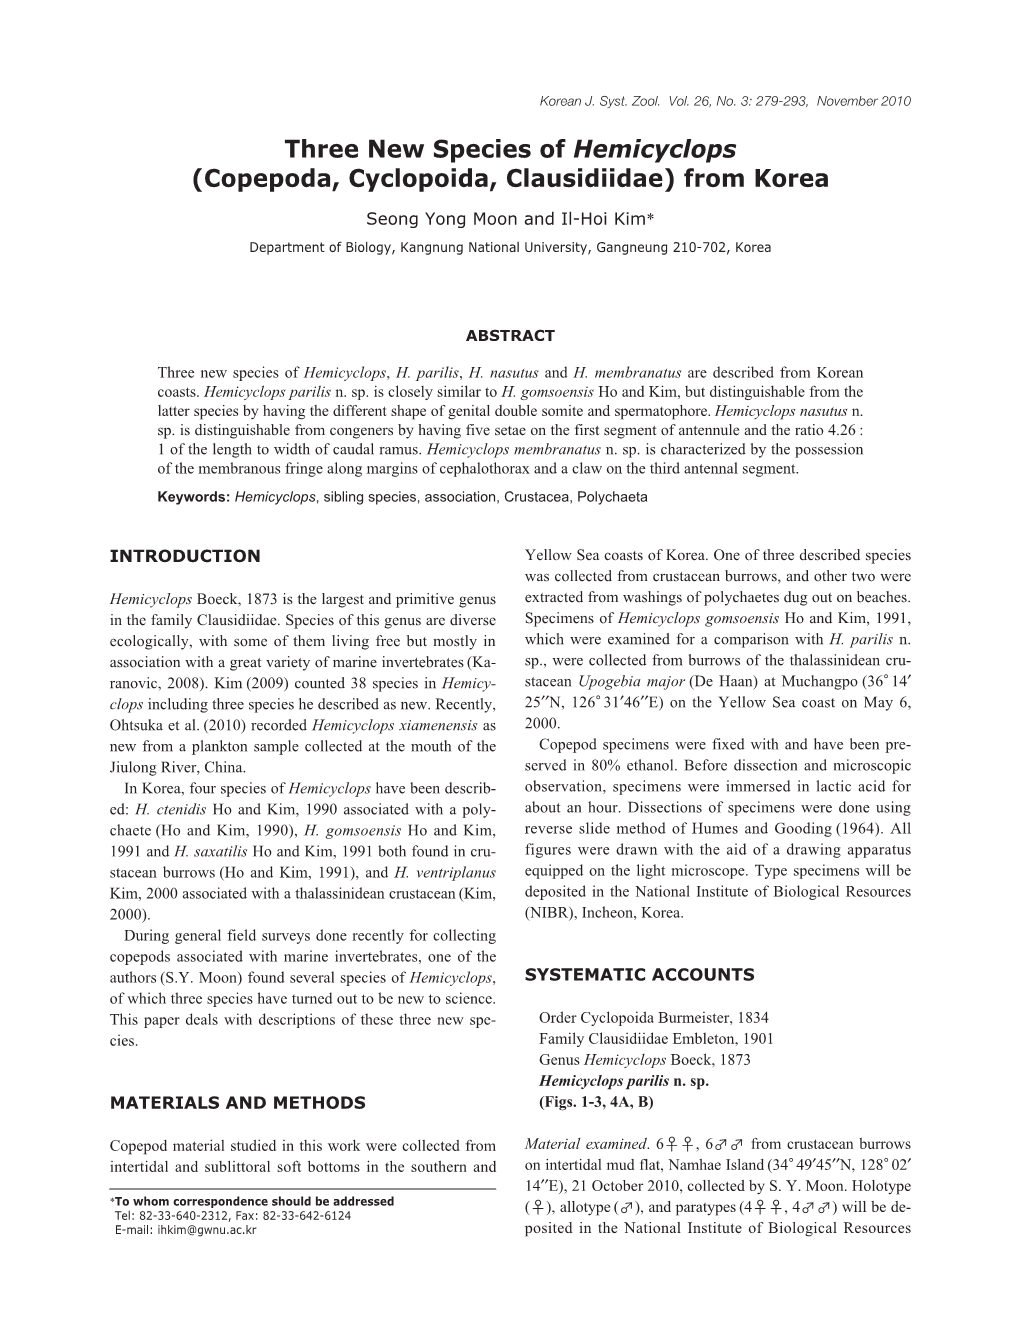 Copepoda, Cyclopoida, Clausidiidae) from Korea